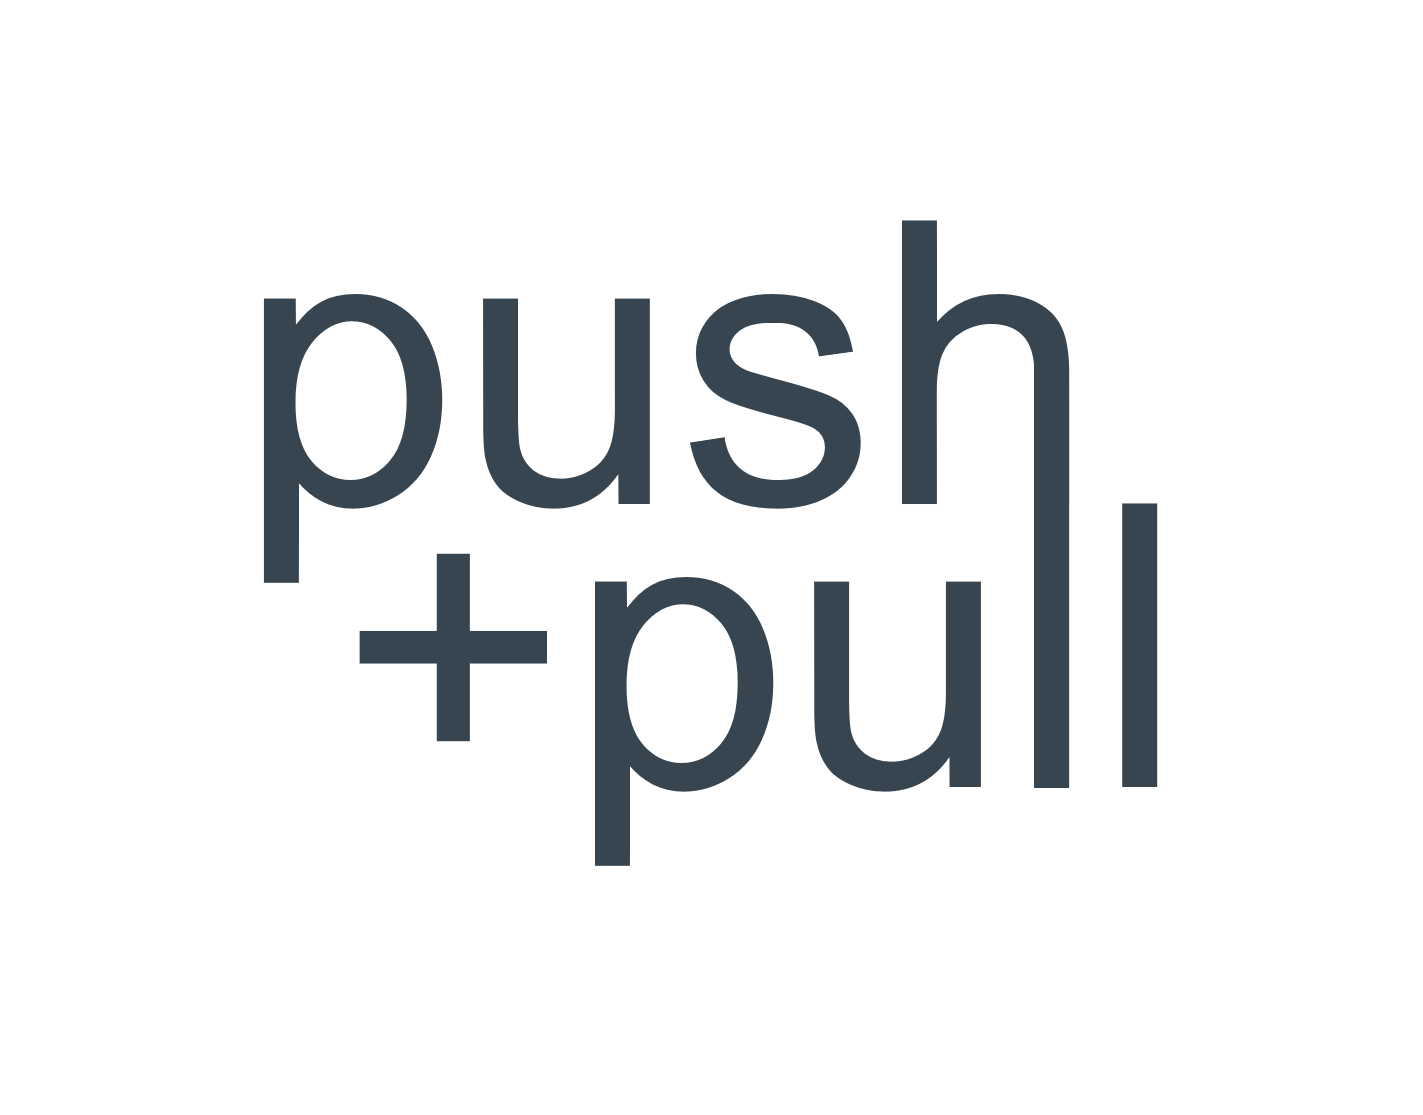 Push Pull - Gunnar Madsen (feat. MCMGM) - youtube music video